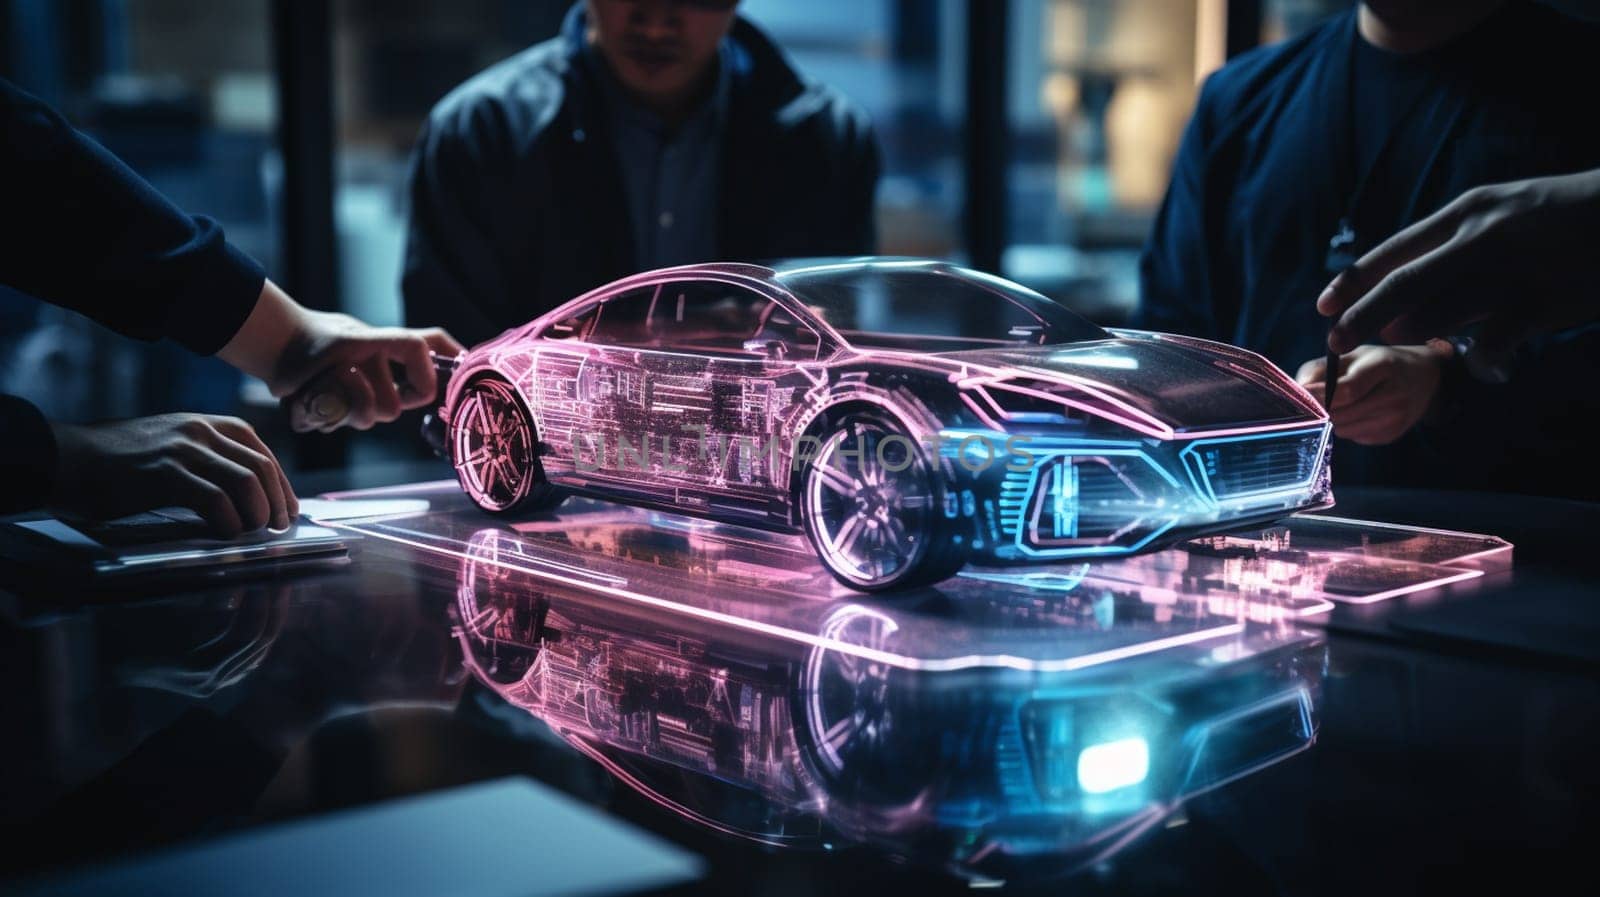 digital car technology smart in virtuel room. High quality photo